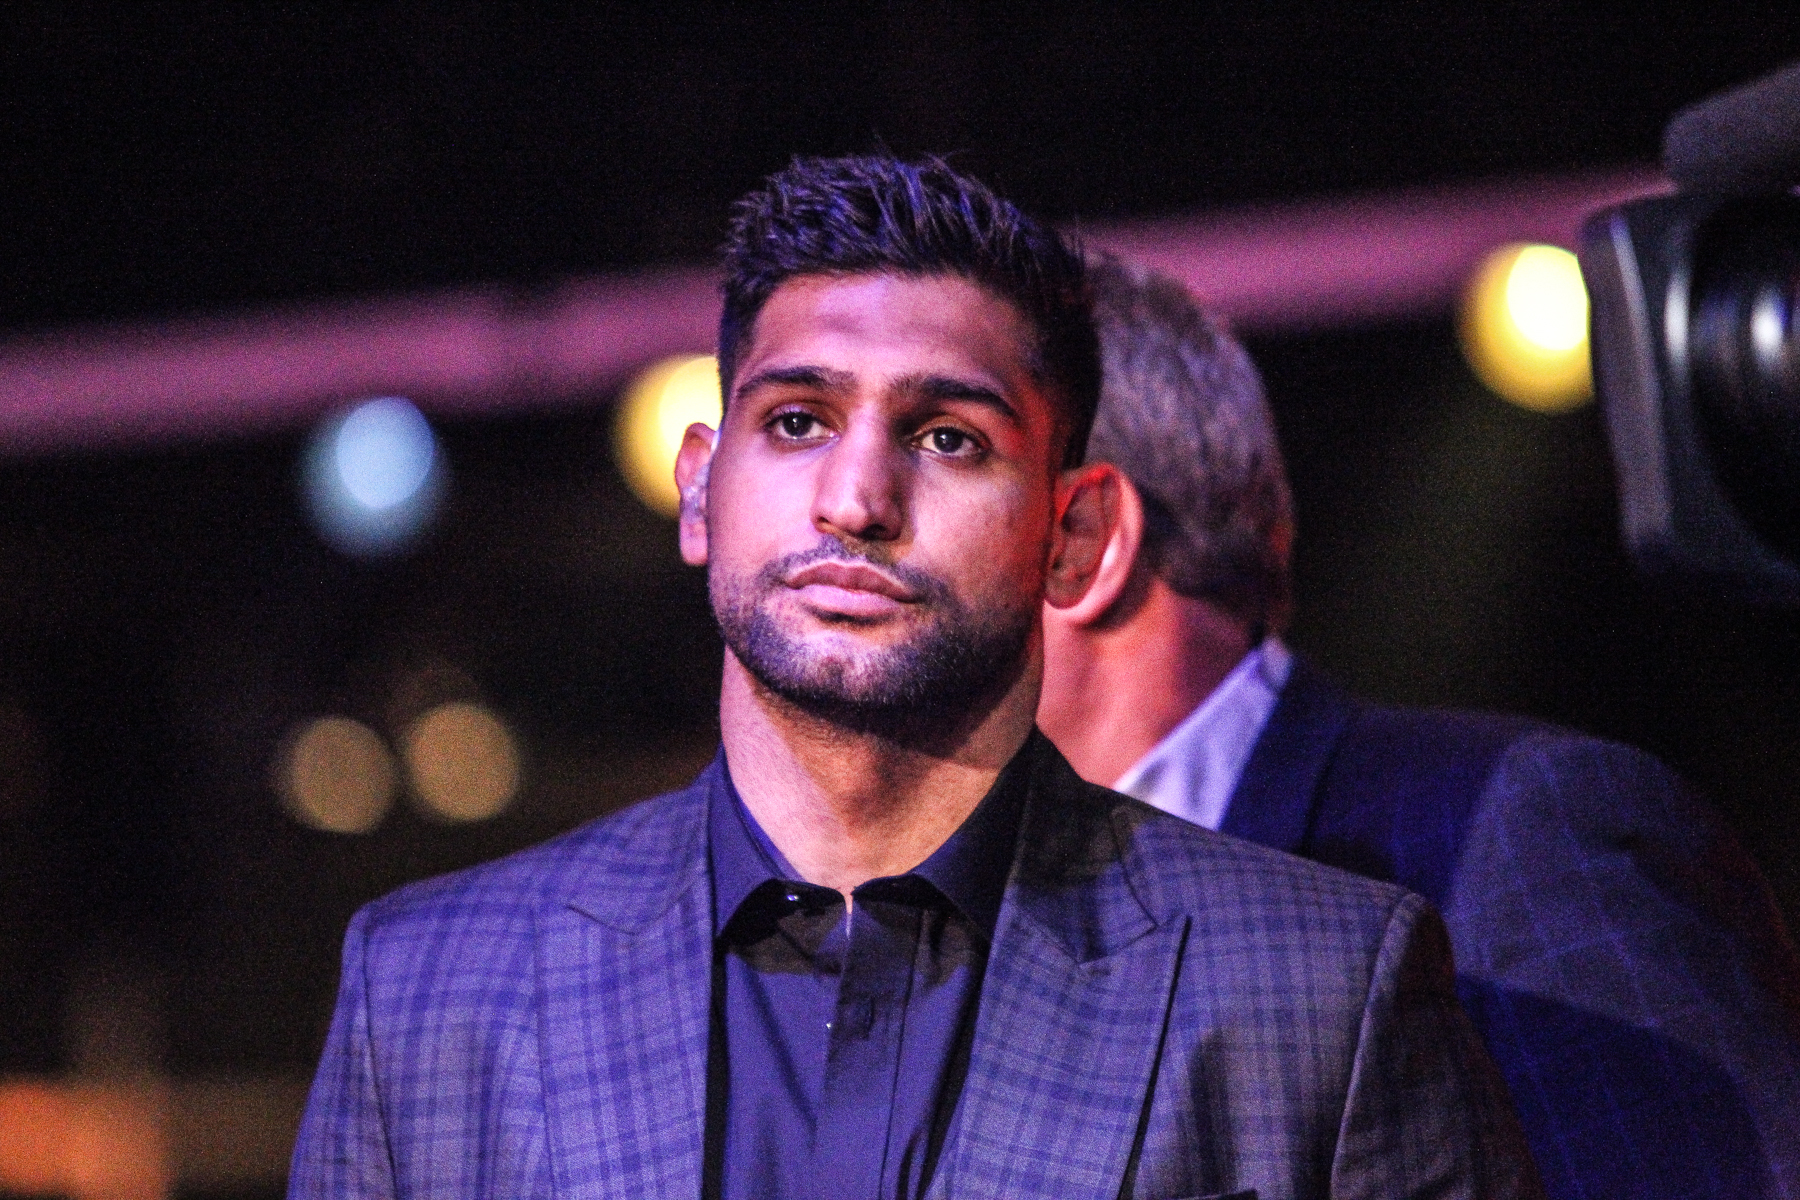 Boxer Amir Khan